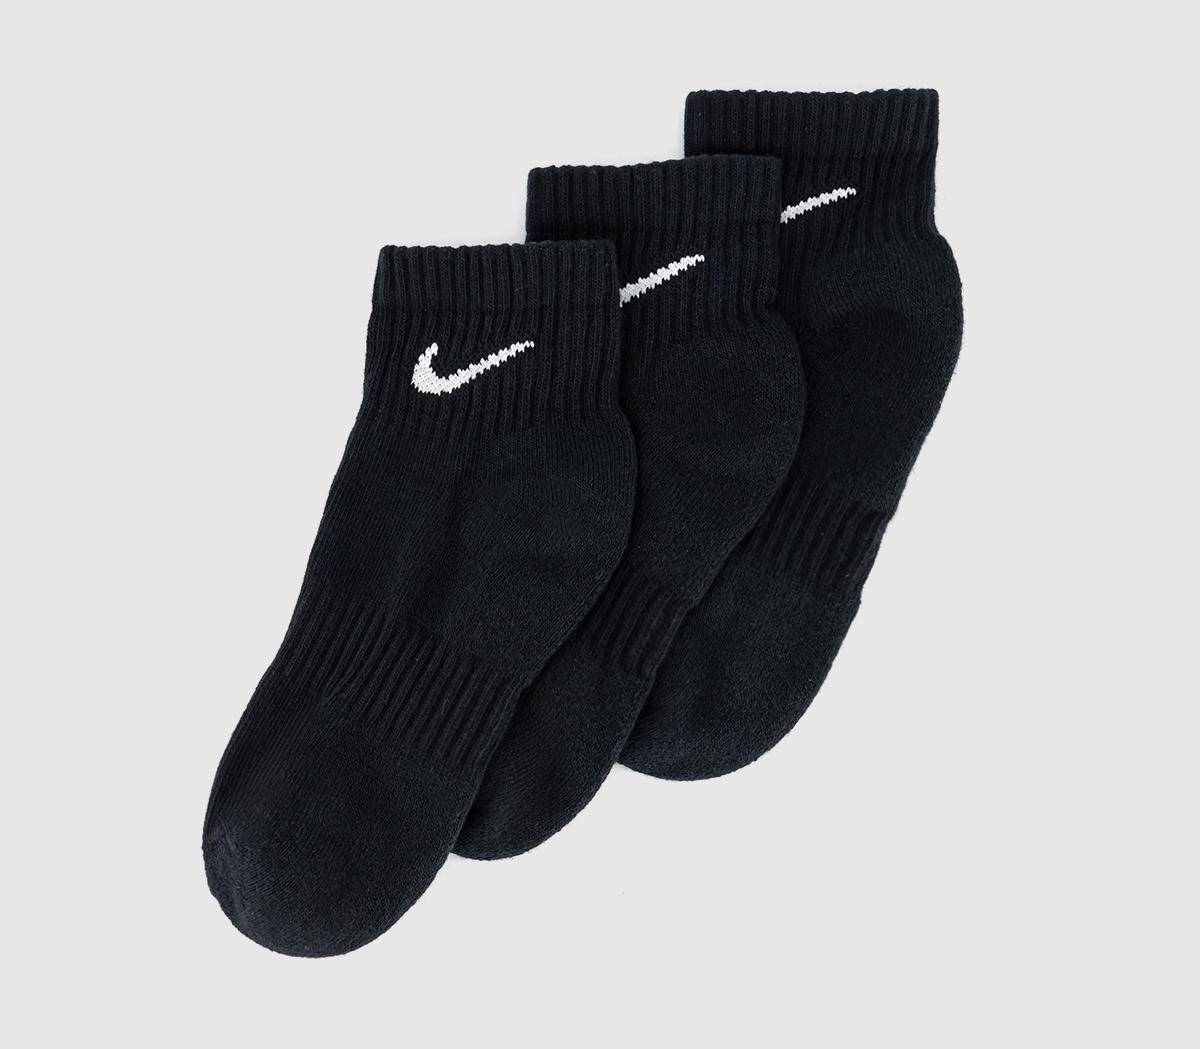 NikeTraining Ankle Socks 3 PairsBlack White